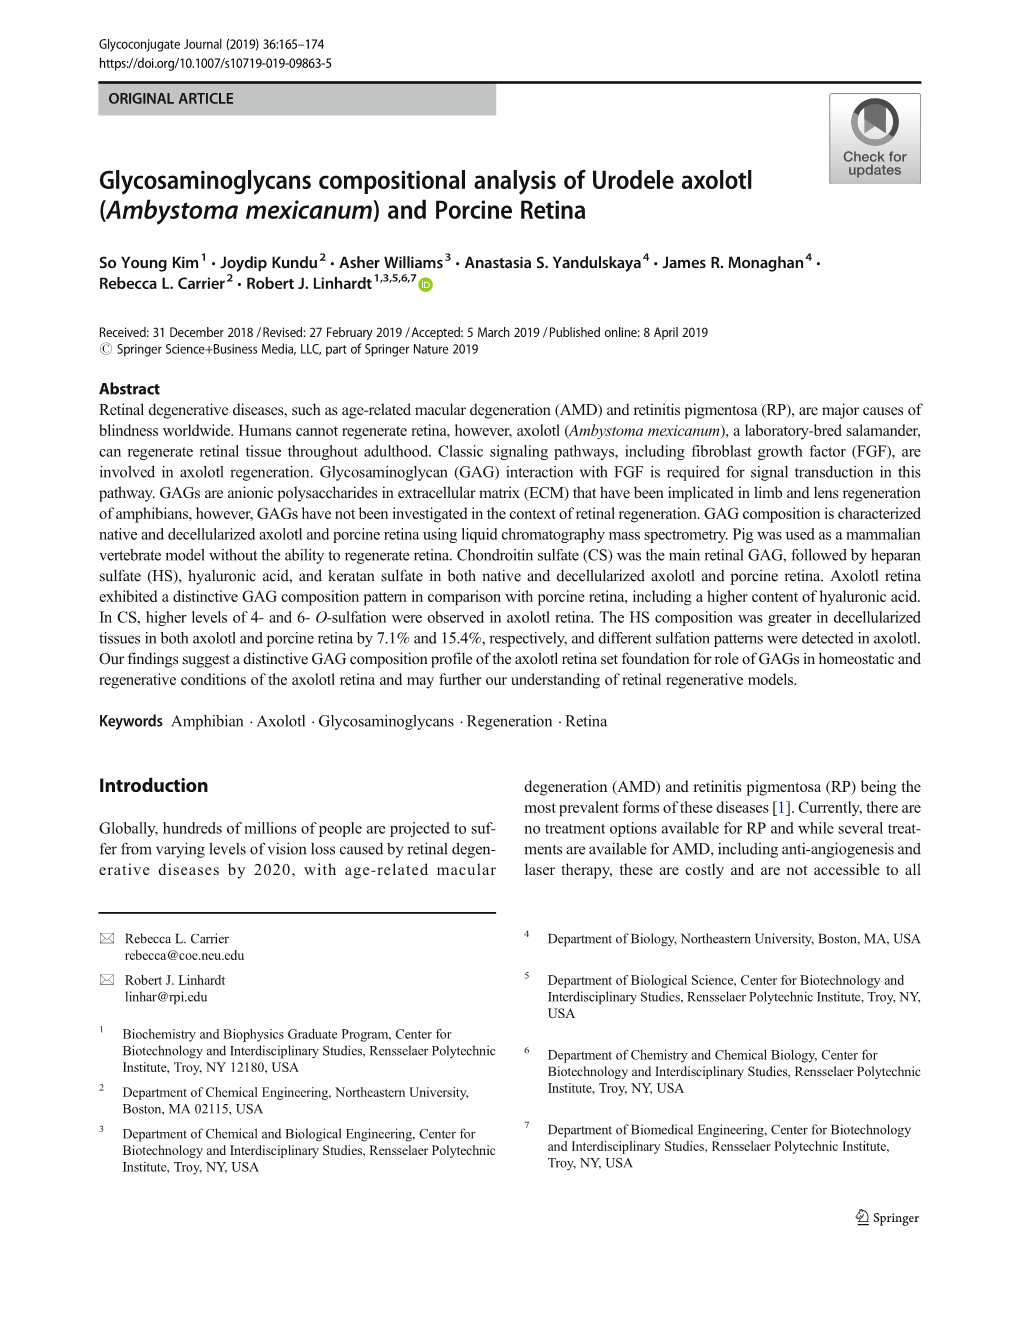 Glycosaminoglycans Compositional Analysis of Urodele Axolotl (Ambystoma Mexicanum) and Porcine Retina